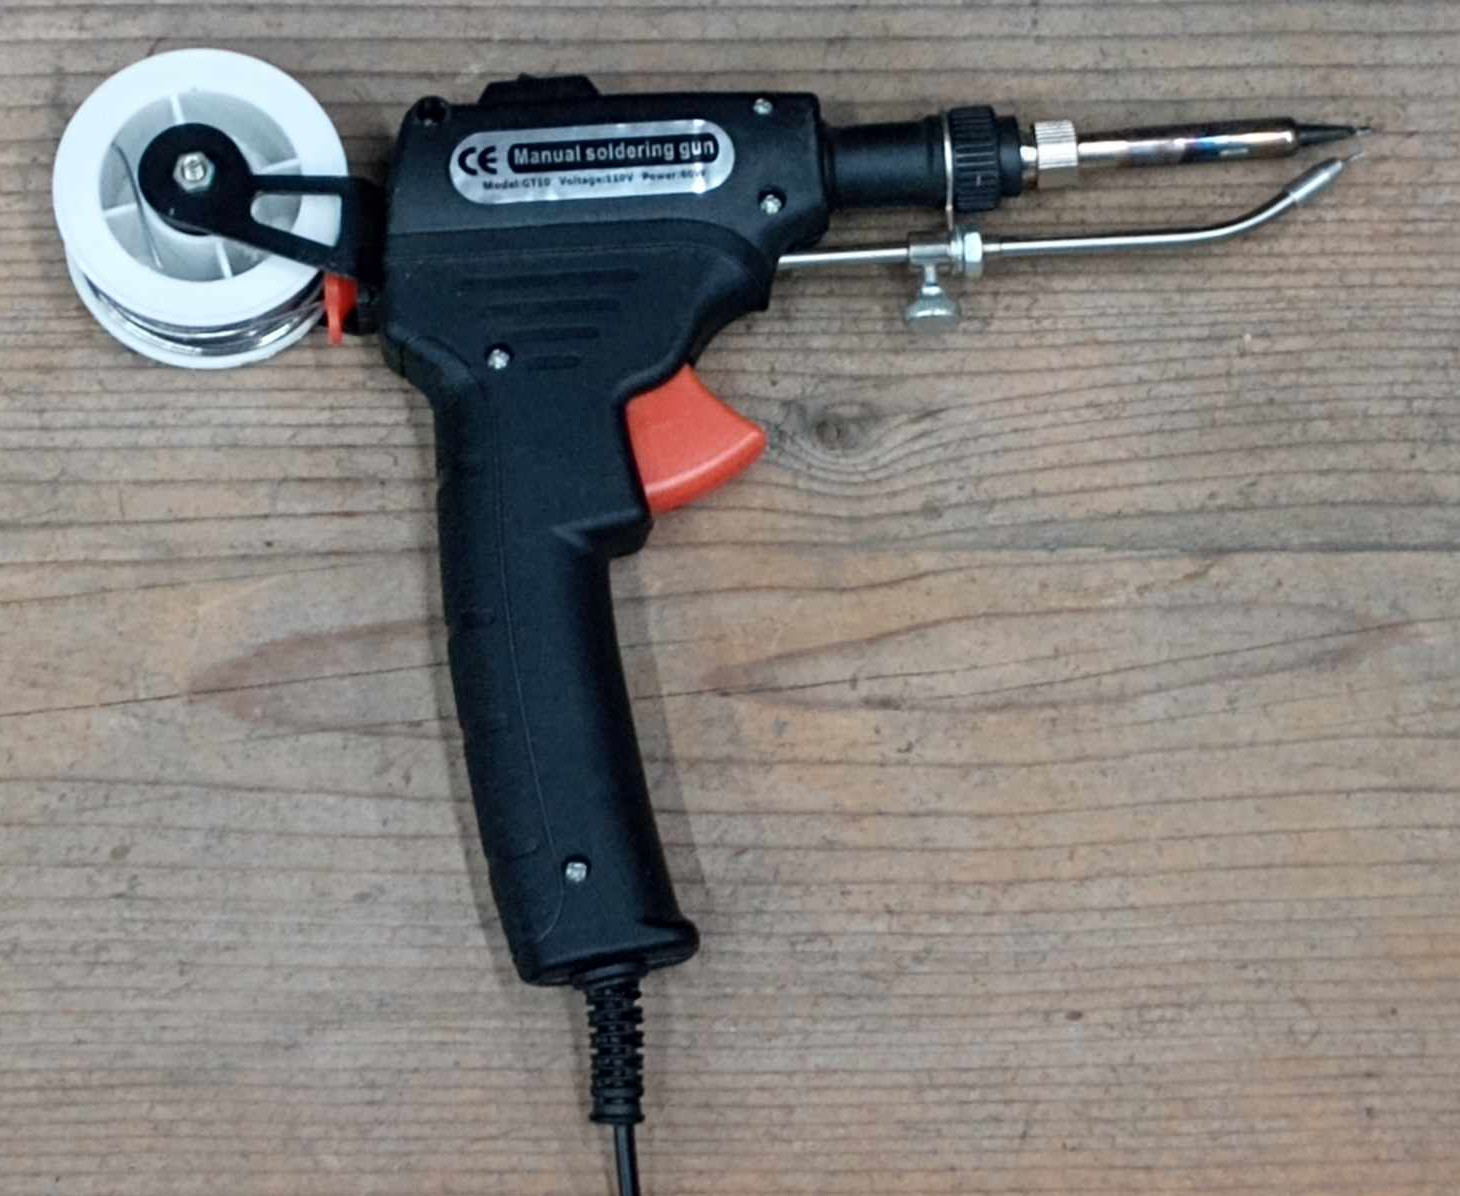 A device that makes Soldering convenient - Self dispensing Solder Gun.